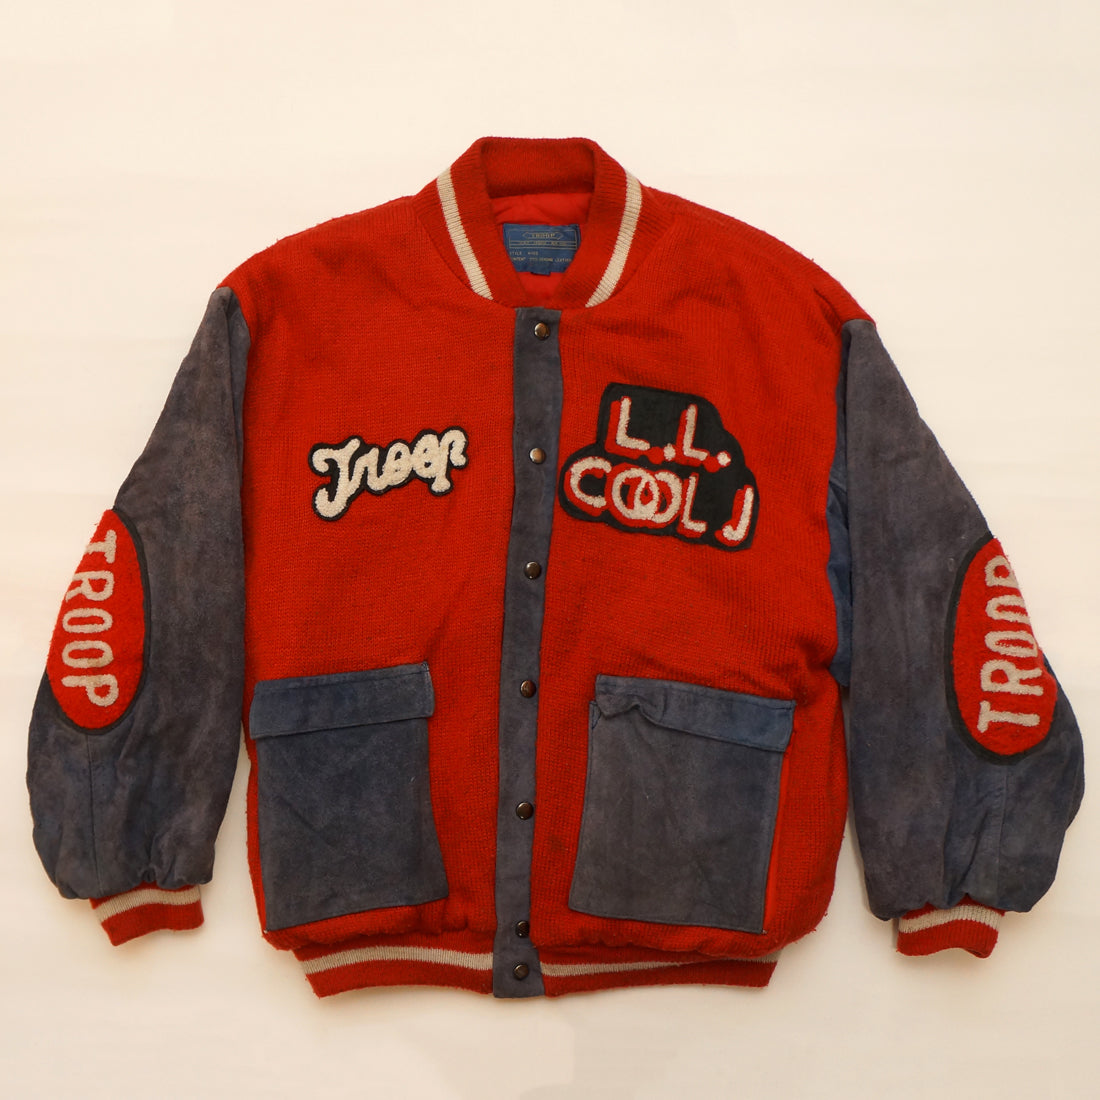 Vintage "L.L. COOL J" Troop Jacket